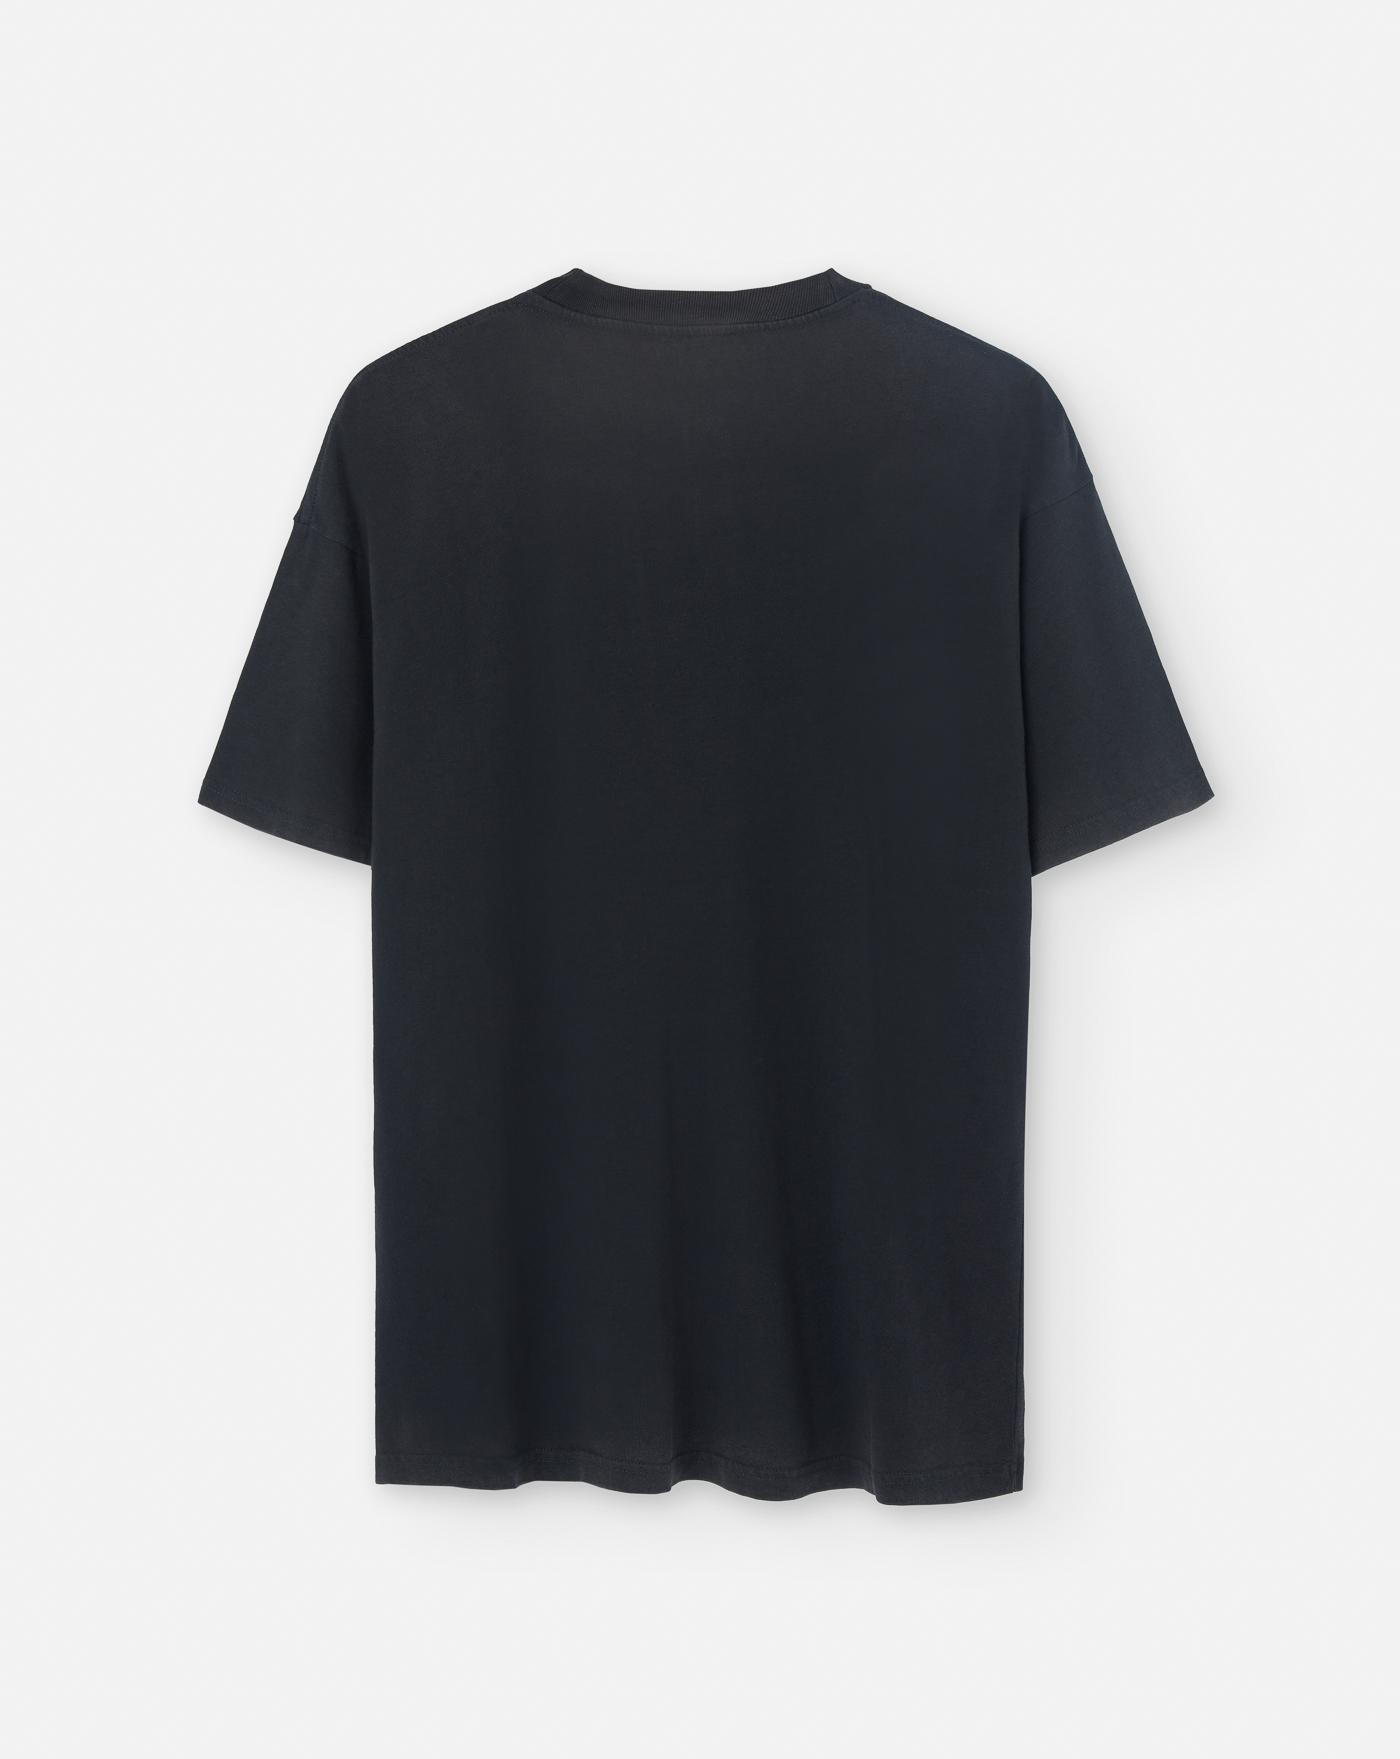 represent-camiseta-throughbred-doberman-t-shirt-black-negra-2